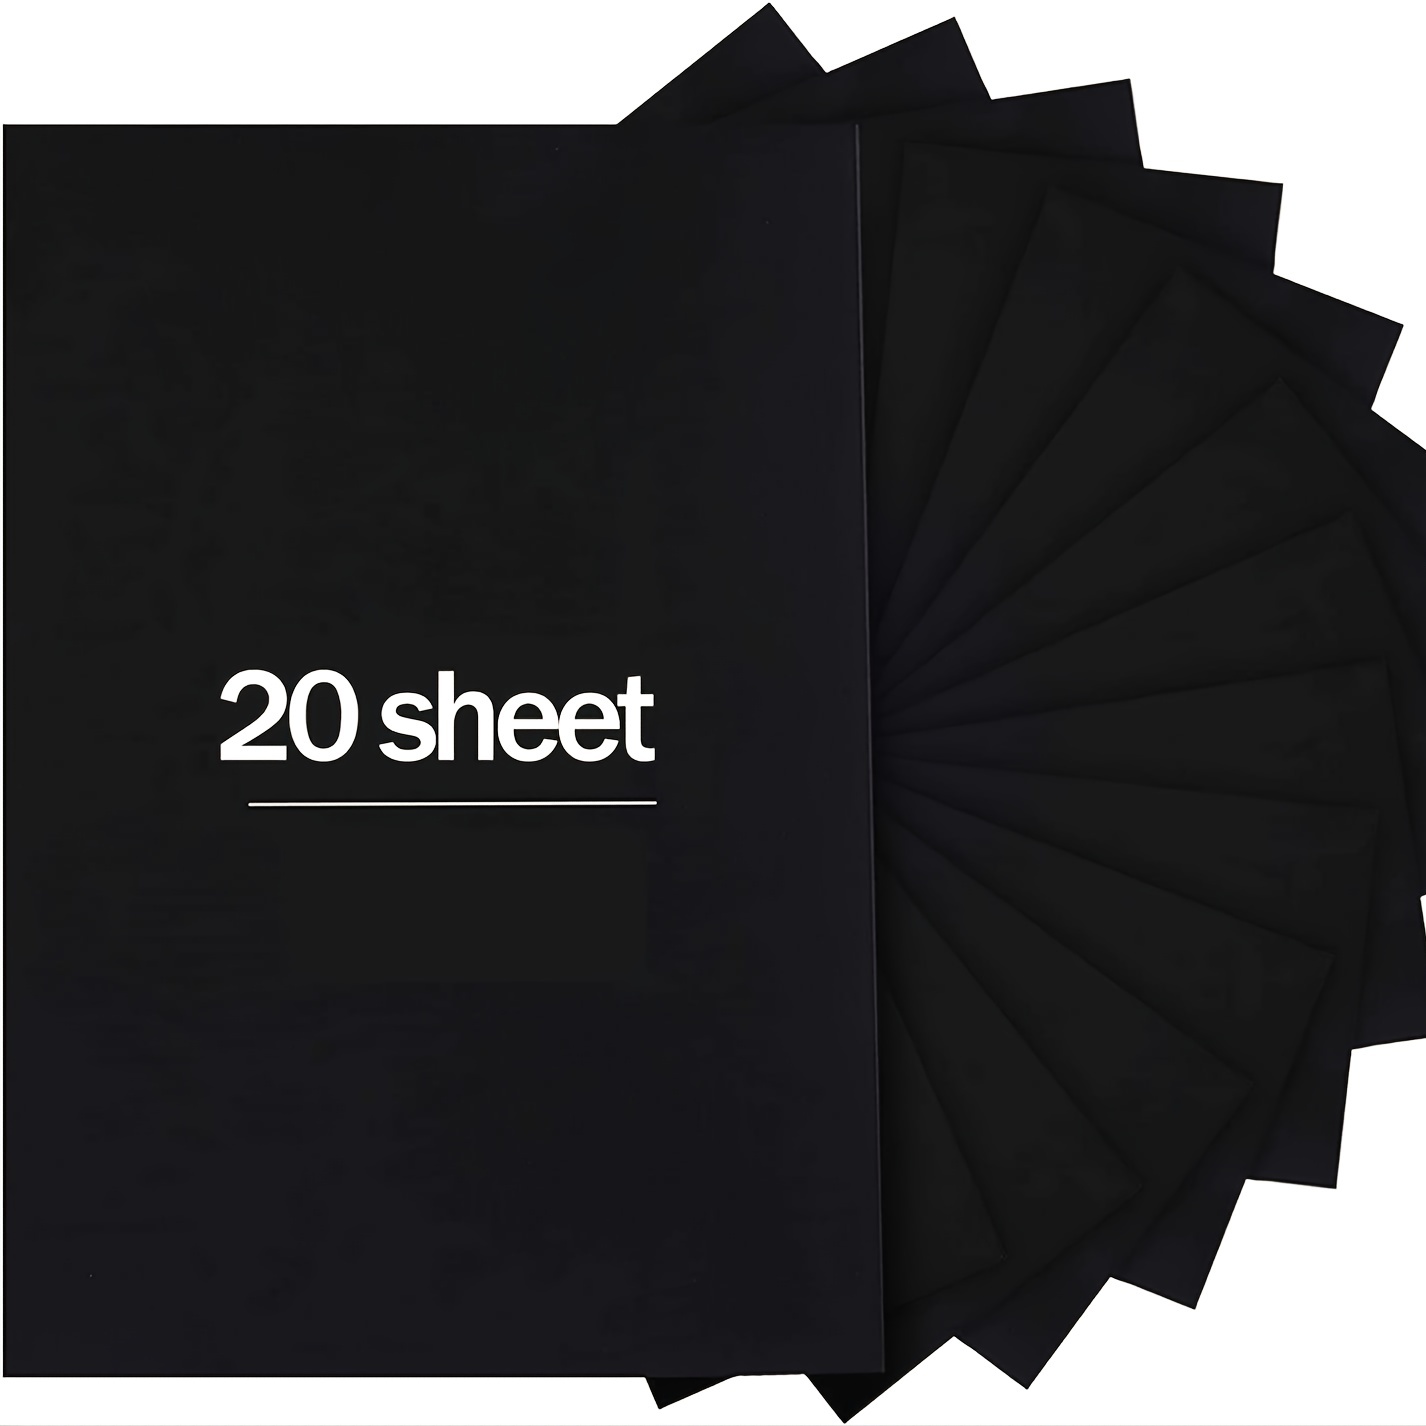 Soft Black Digital Paper Pack for scrapbooking and crafts